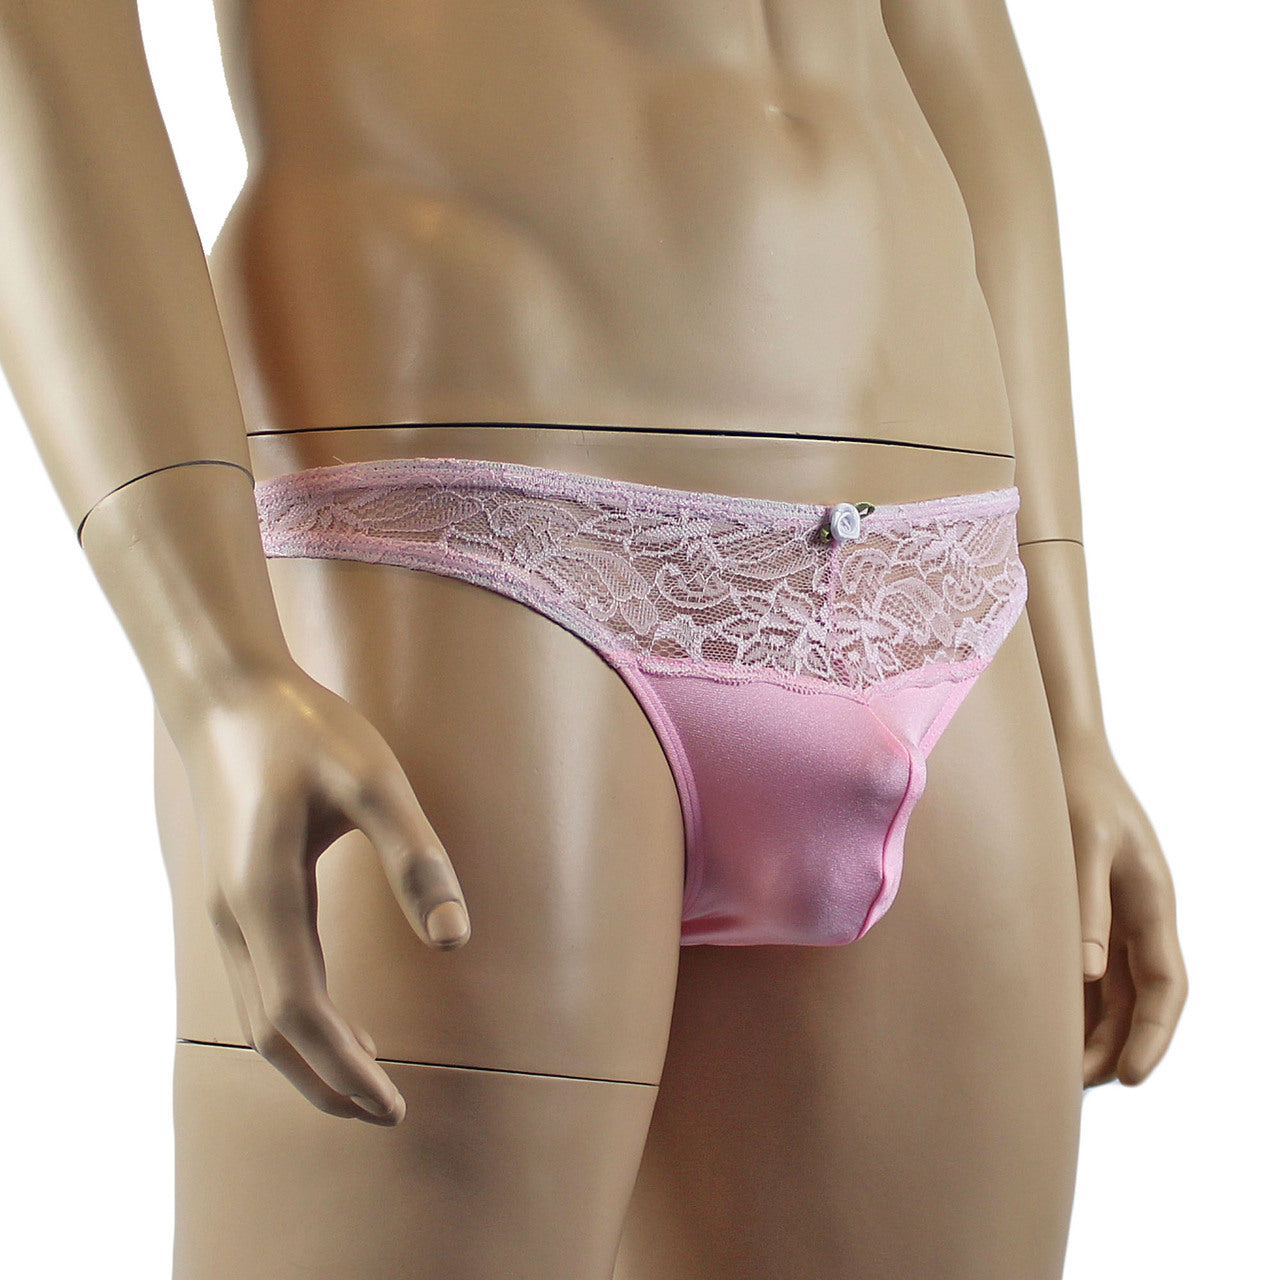 Male Penny Lingerie Stretch Spandex Capri Bikini with Lace Light Pink